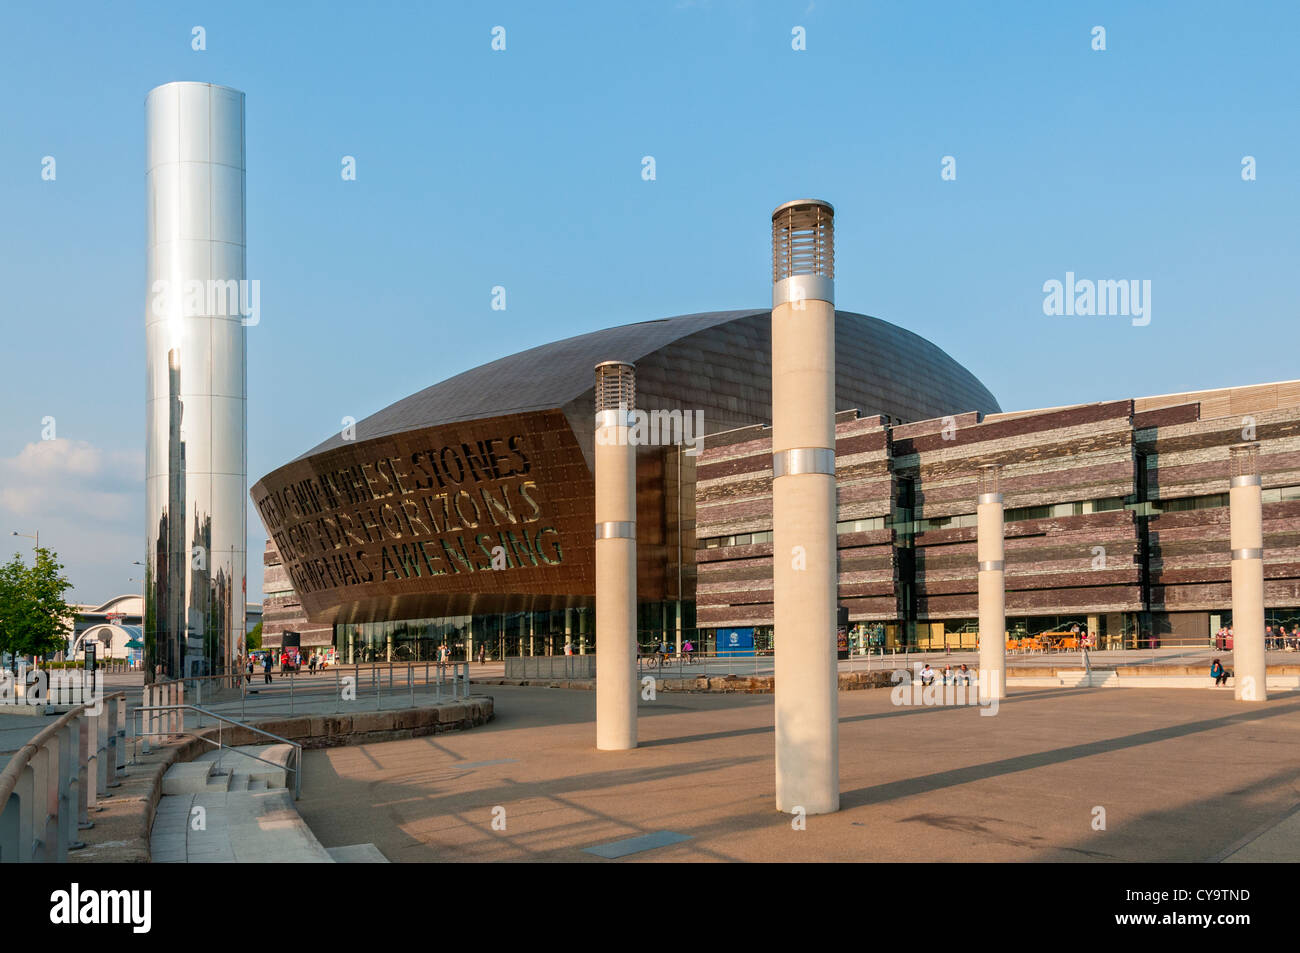 Wales, Cardiff Bay, Roald Dahls Plass, Wales Millennium Centre, performing arts venue Stock Photo